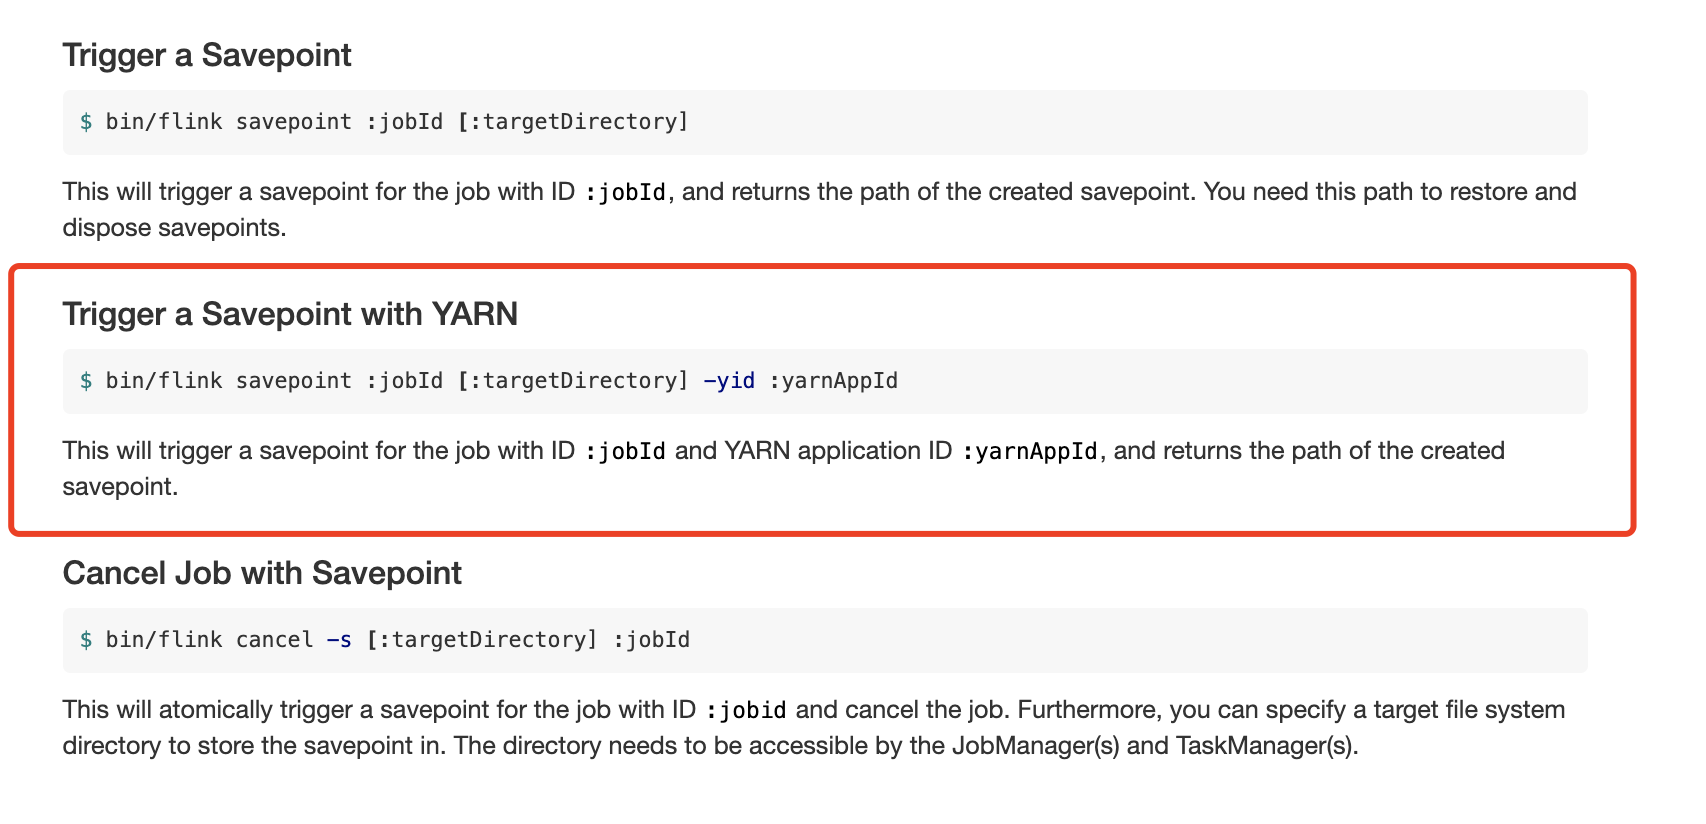 Flink 1.12 yarn-cluster模式触发Savepoint with Yarn指定-yid报异常failed timeout问题及解决